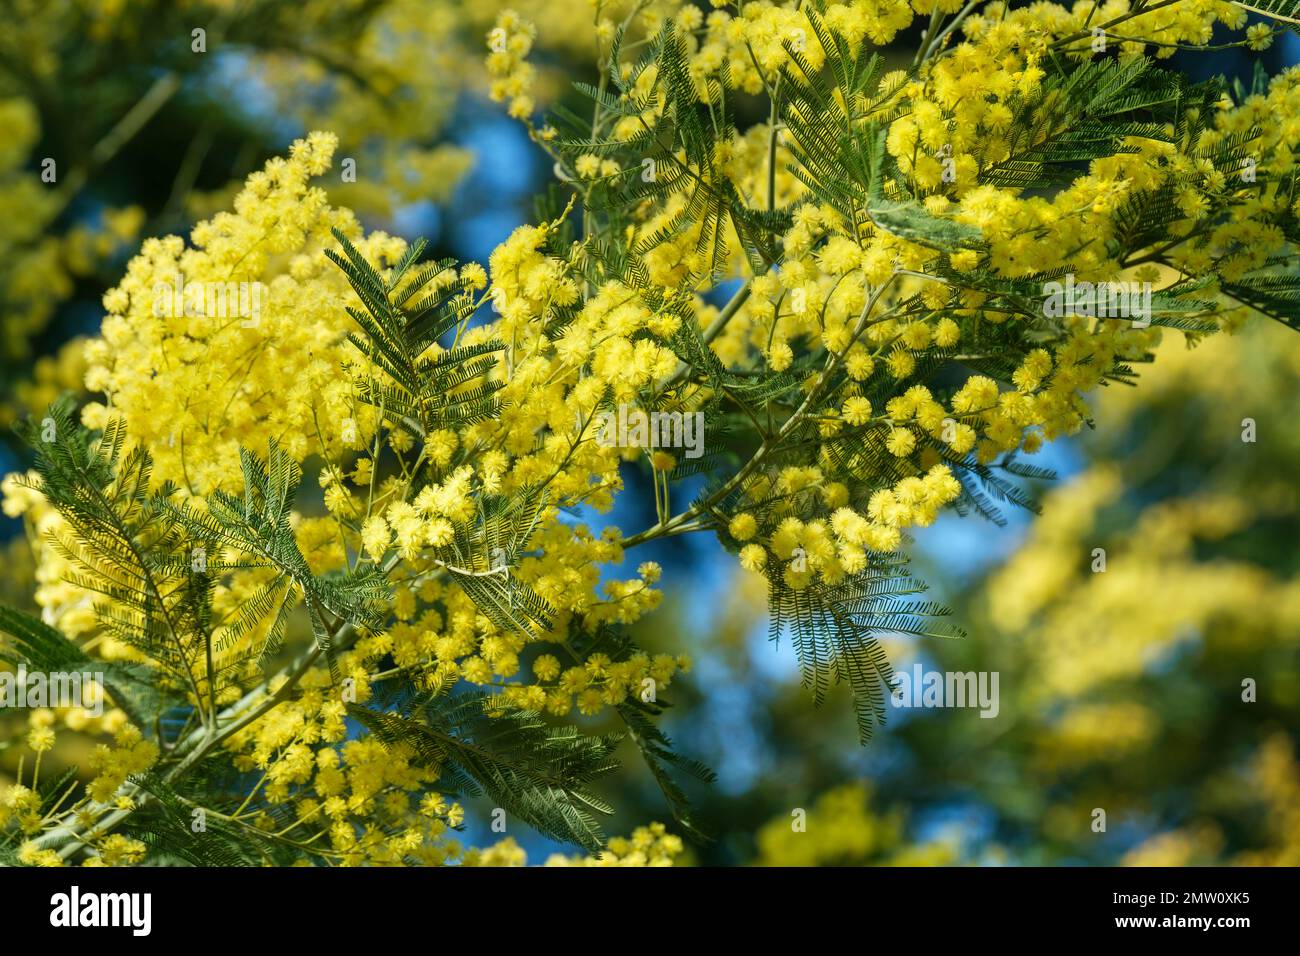 Acacia dealbata, blue wattle, mimosa, evergreen shrub, yellow flowerheads, borne in terminal clusters Stock Photo